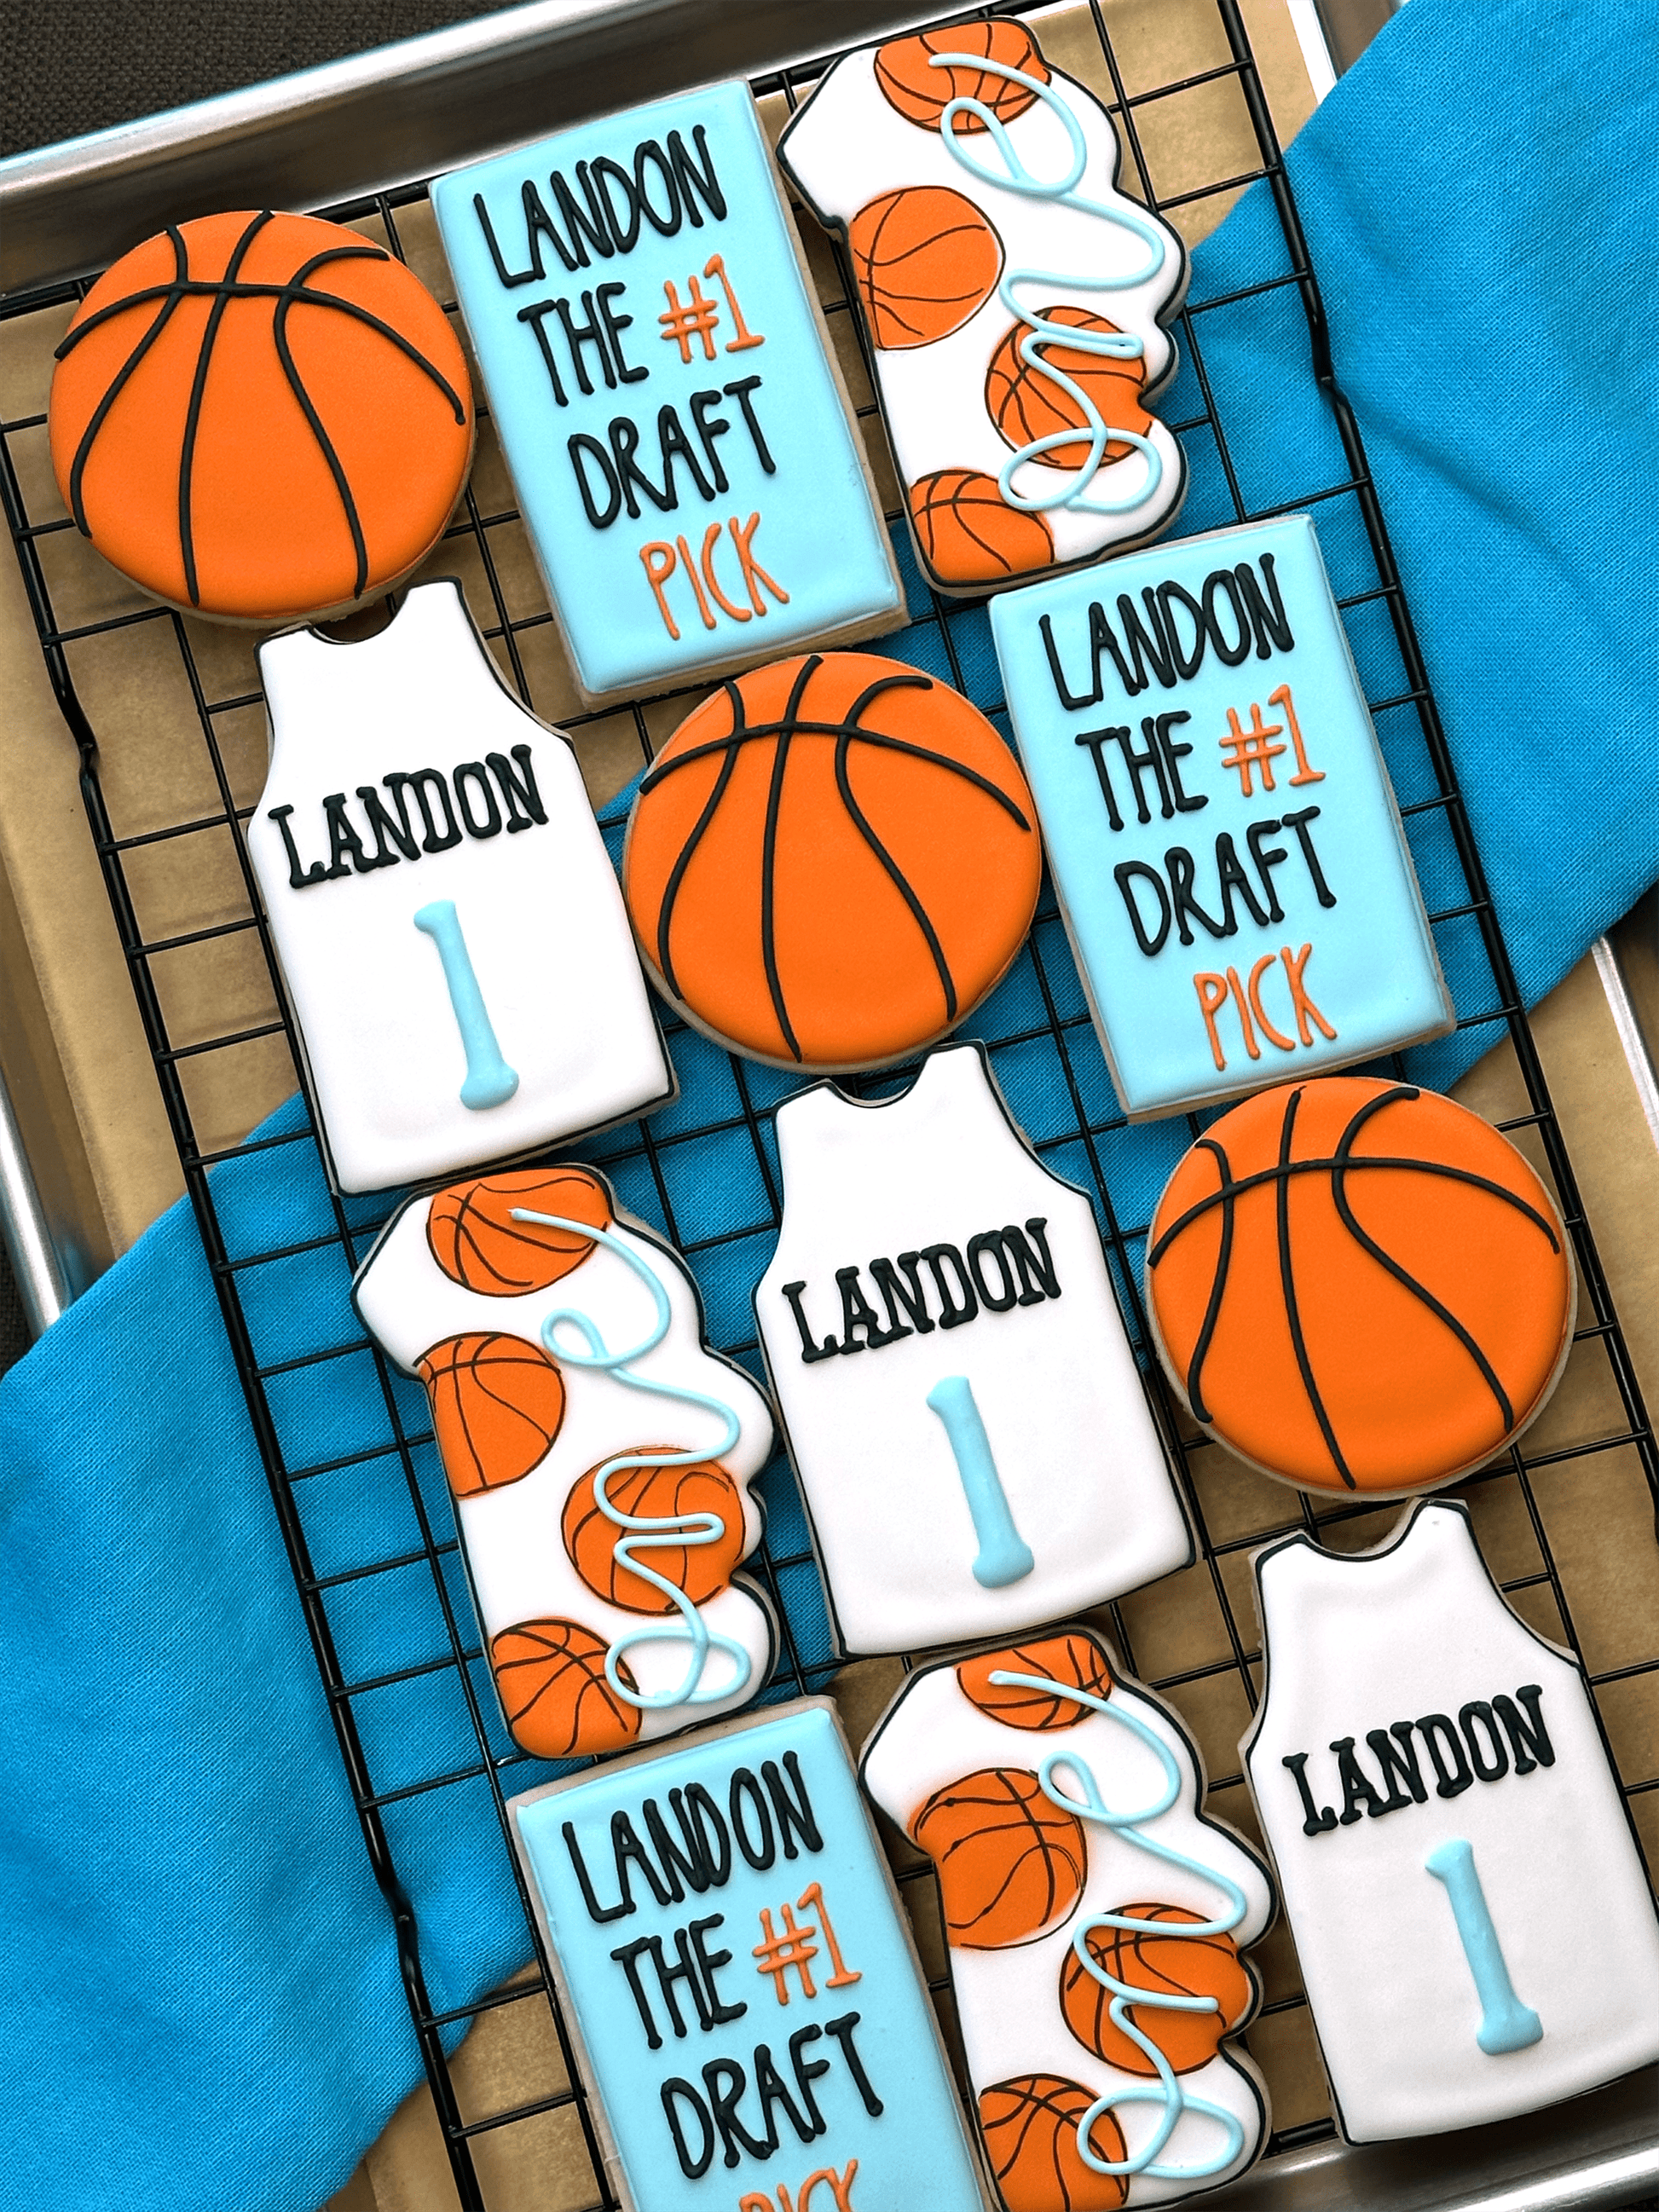 Basketball birthday cookies, first draft pick, basketball, basketball jersey cookies